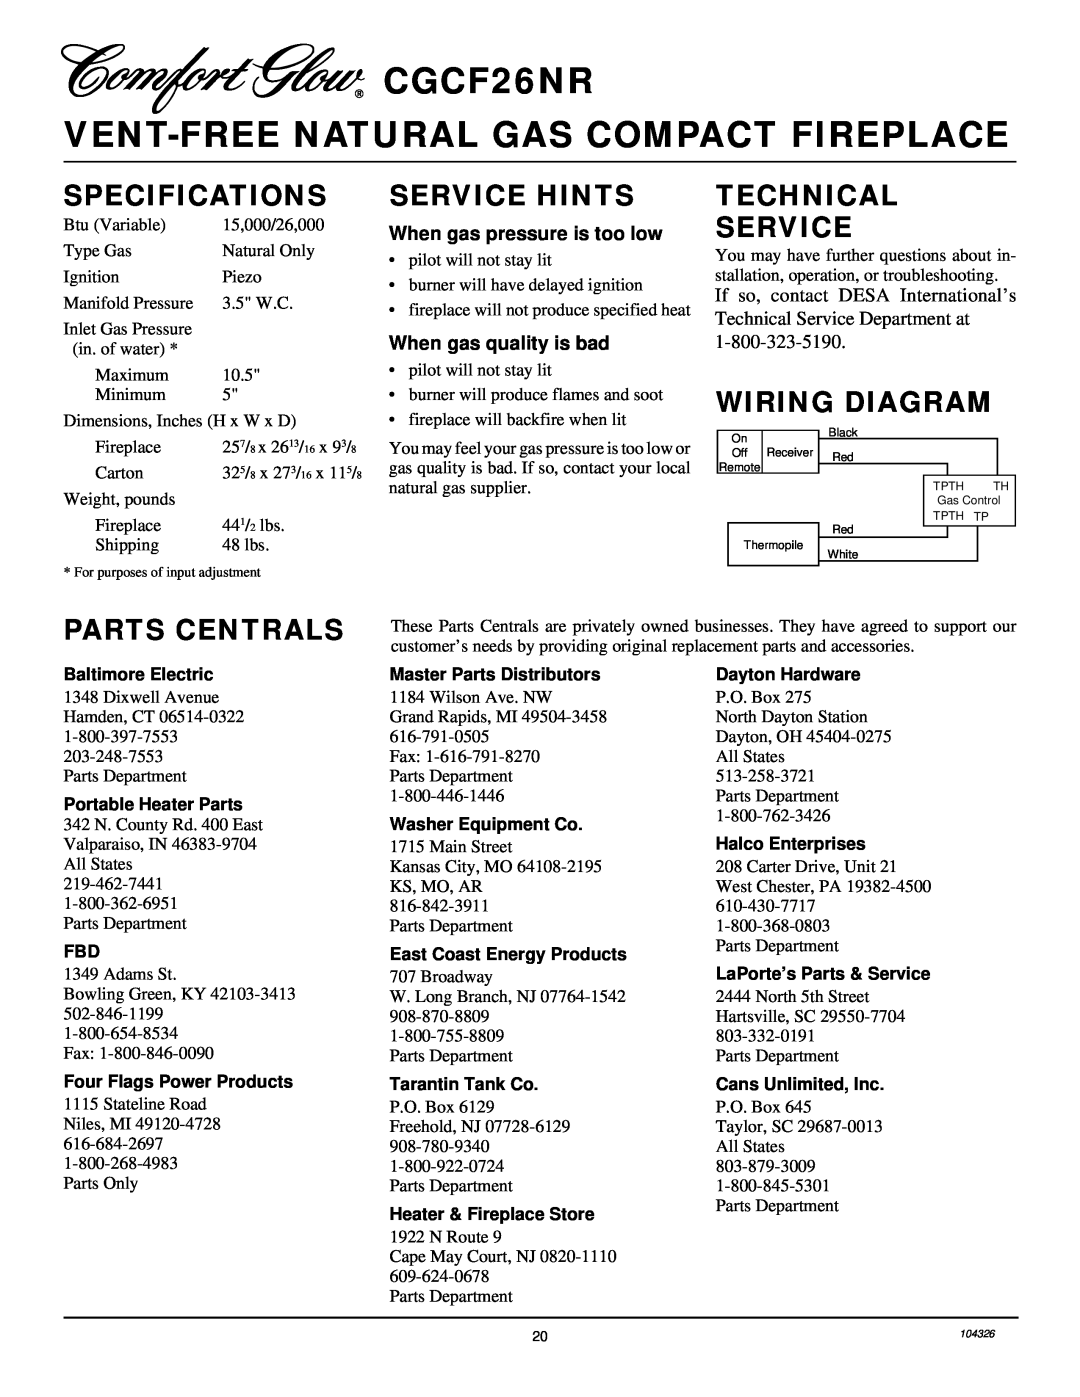 Desa CGCF26NR installation manual Specifications, Service Hints, Technical Service, Wiring Diagram, Parts Centrals 